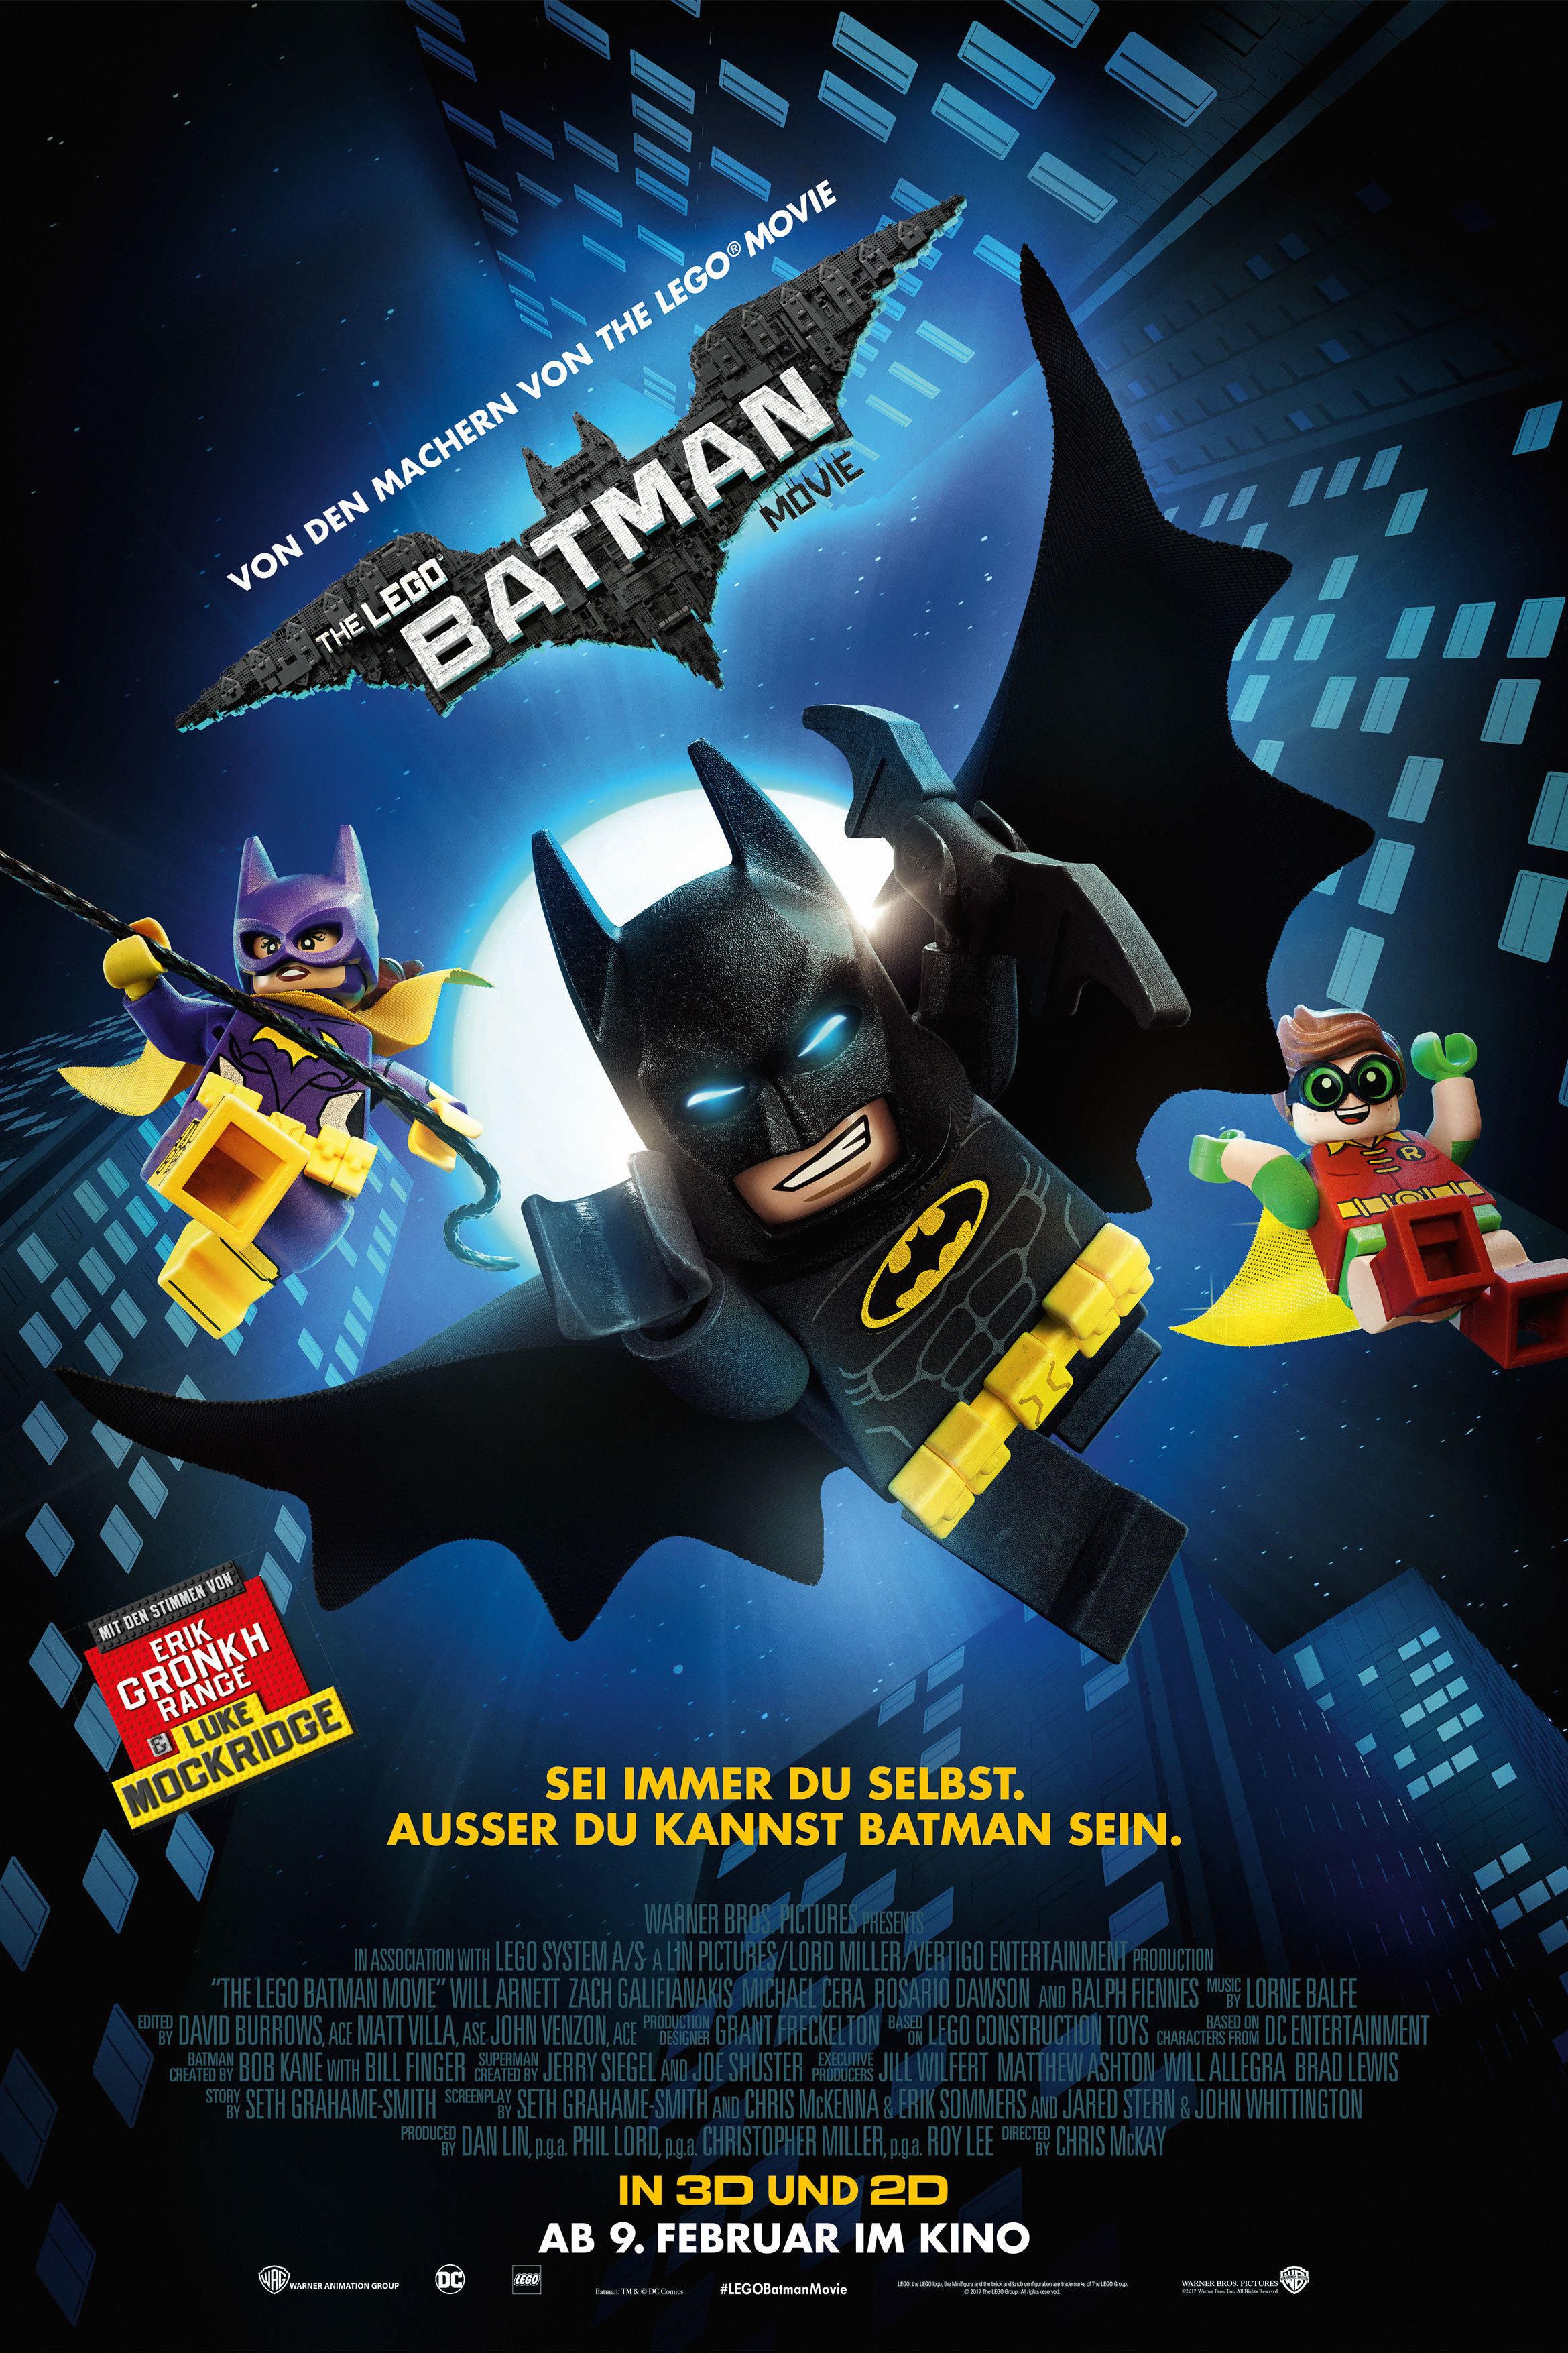 The 'LEGO Batman Movie' Trailer Introduces New Justice League